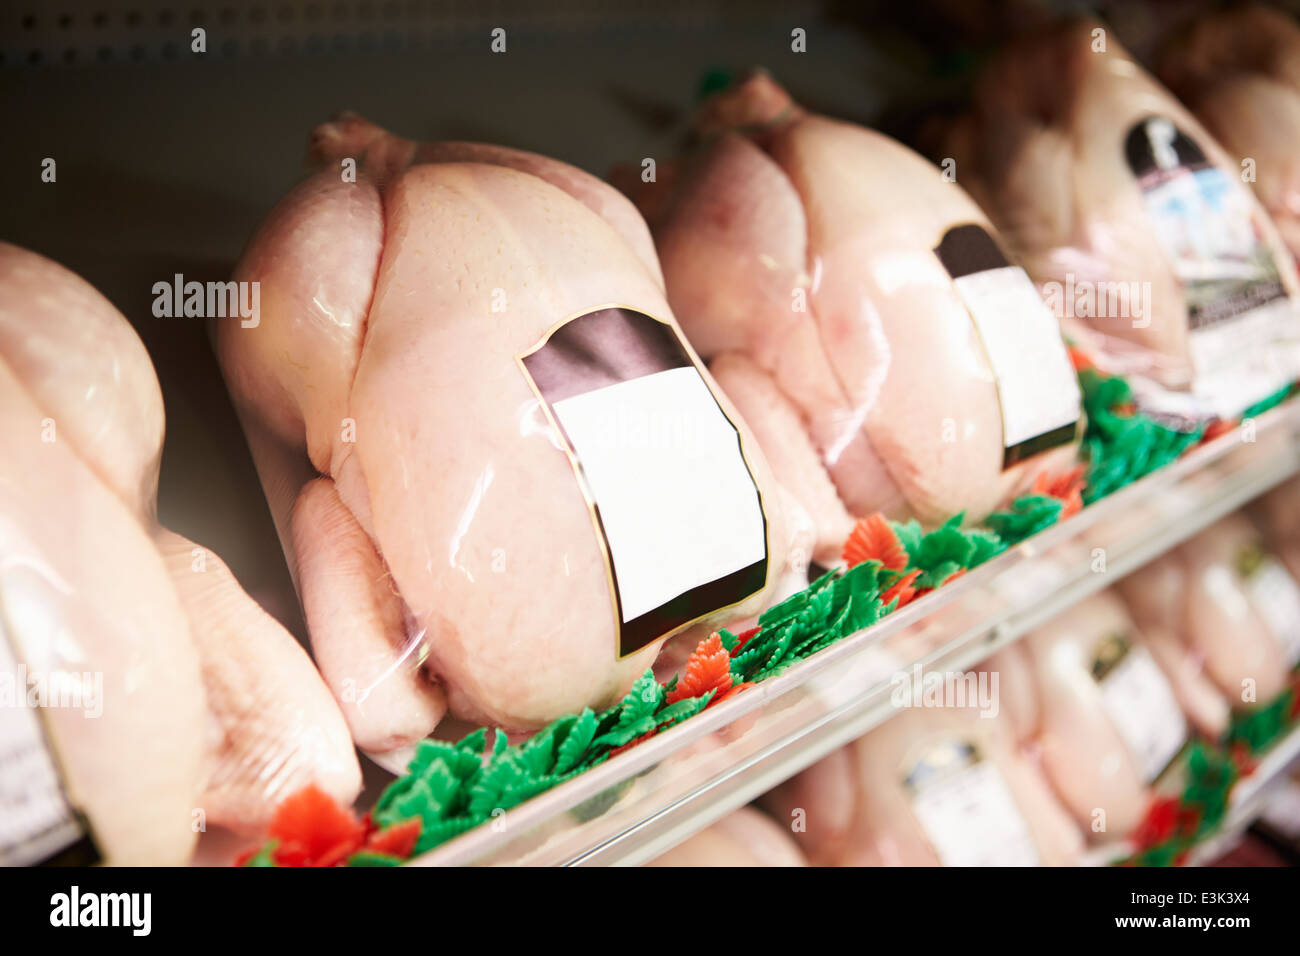 https://c8.alamy.com/comp/E3K3X4/display-of-fresh-chickens-in-butchers-shop-E3K3X4.jpg